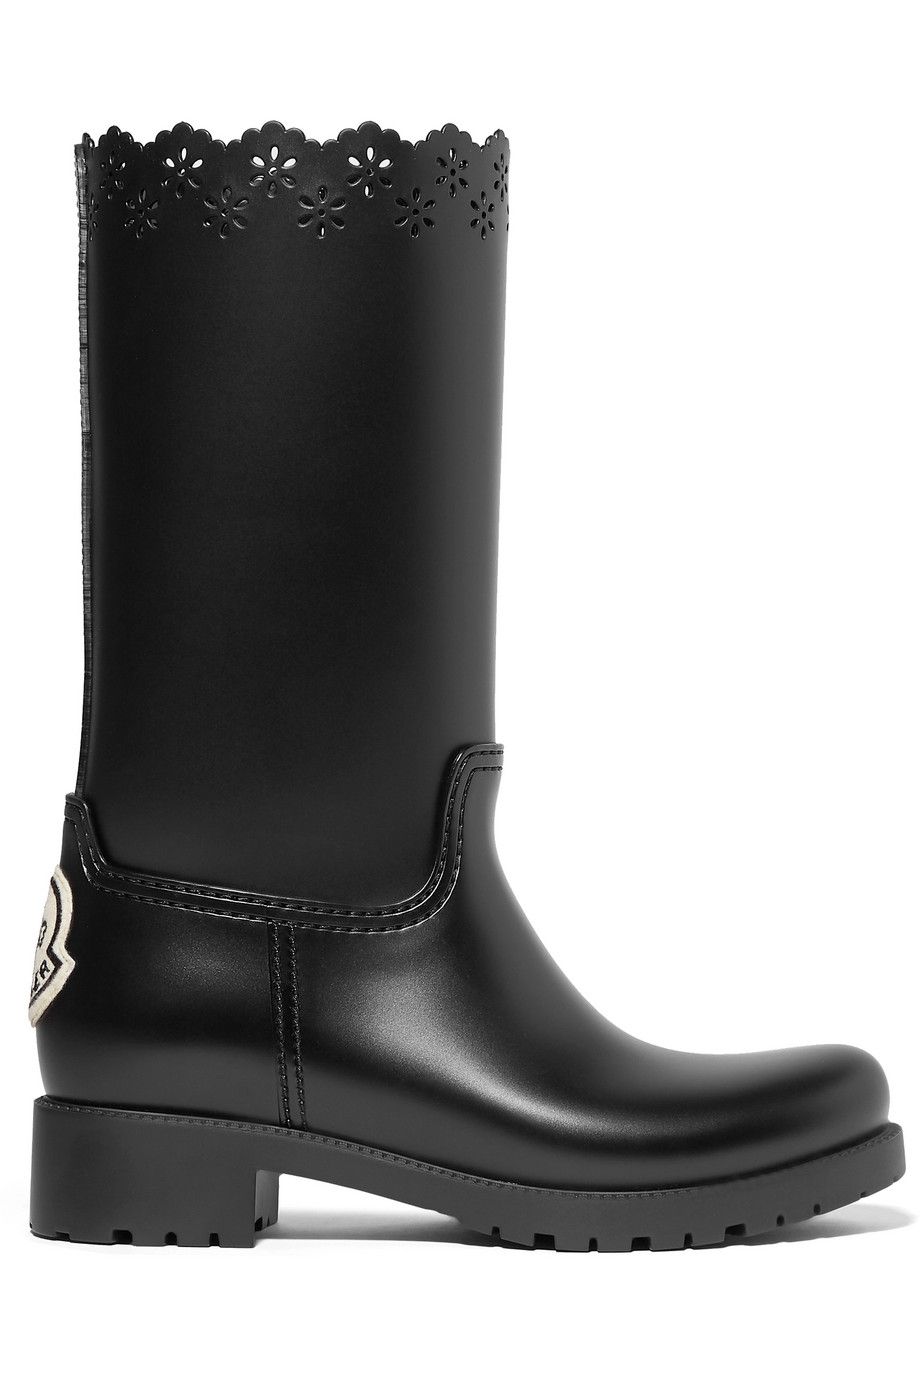 stylish rain boots 219